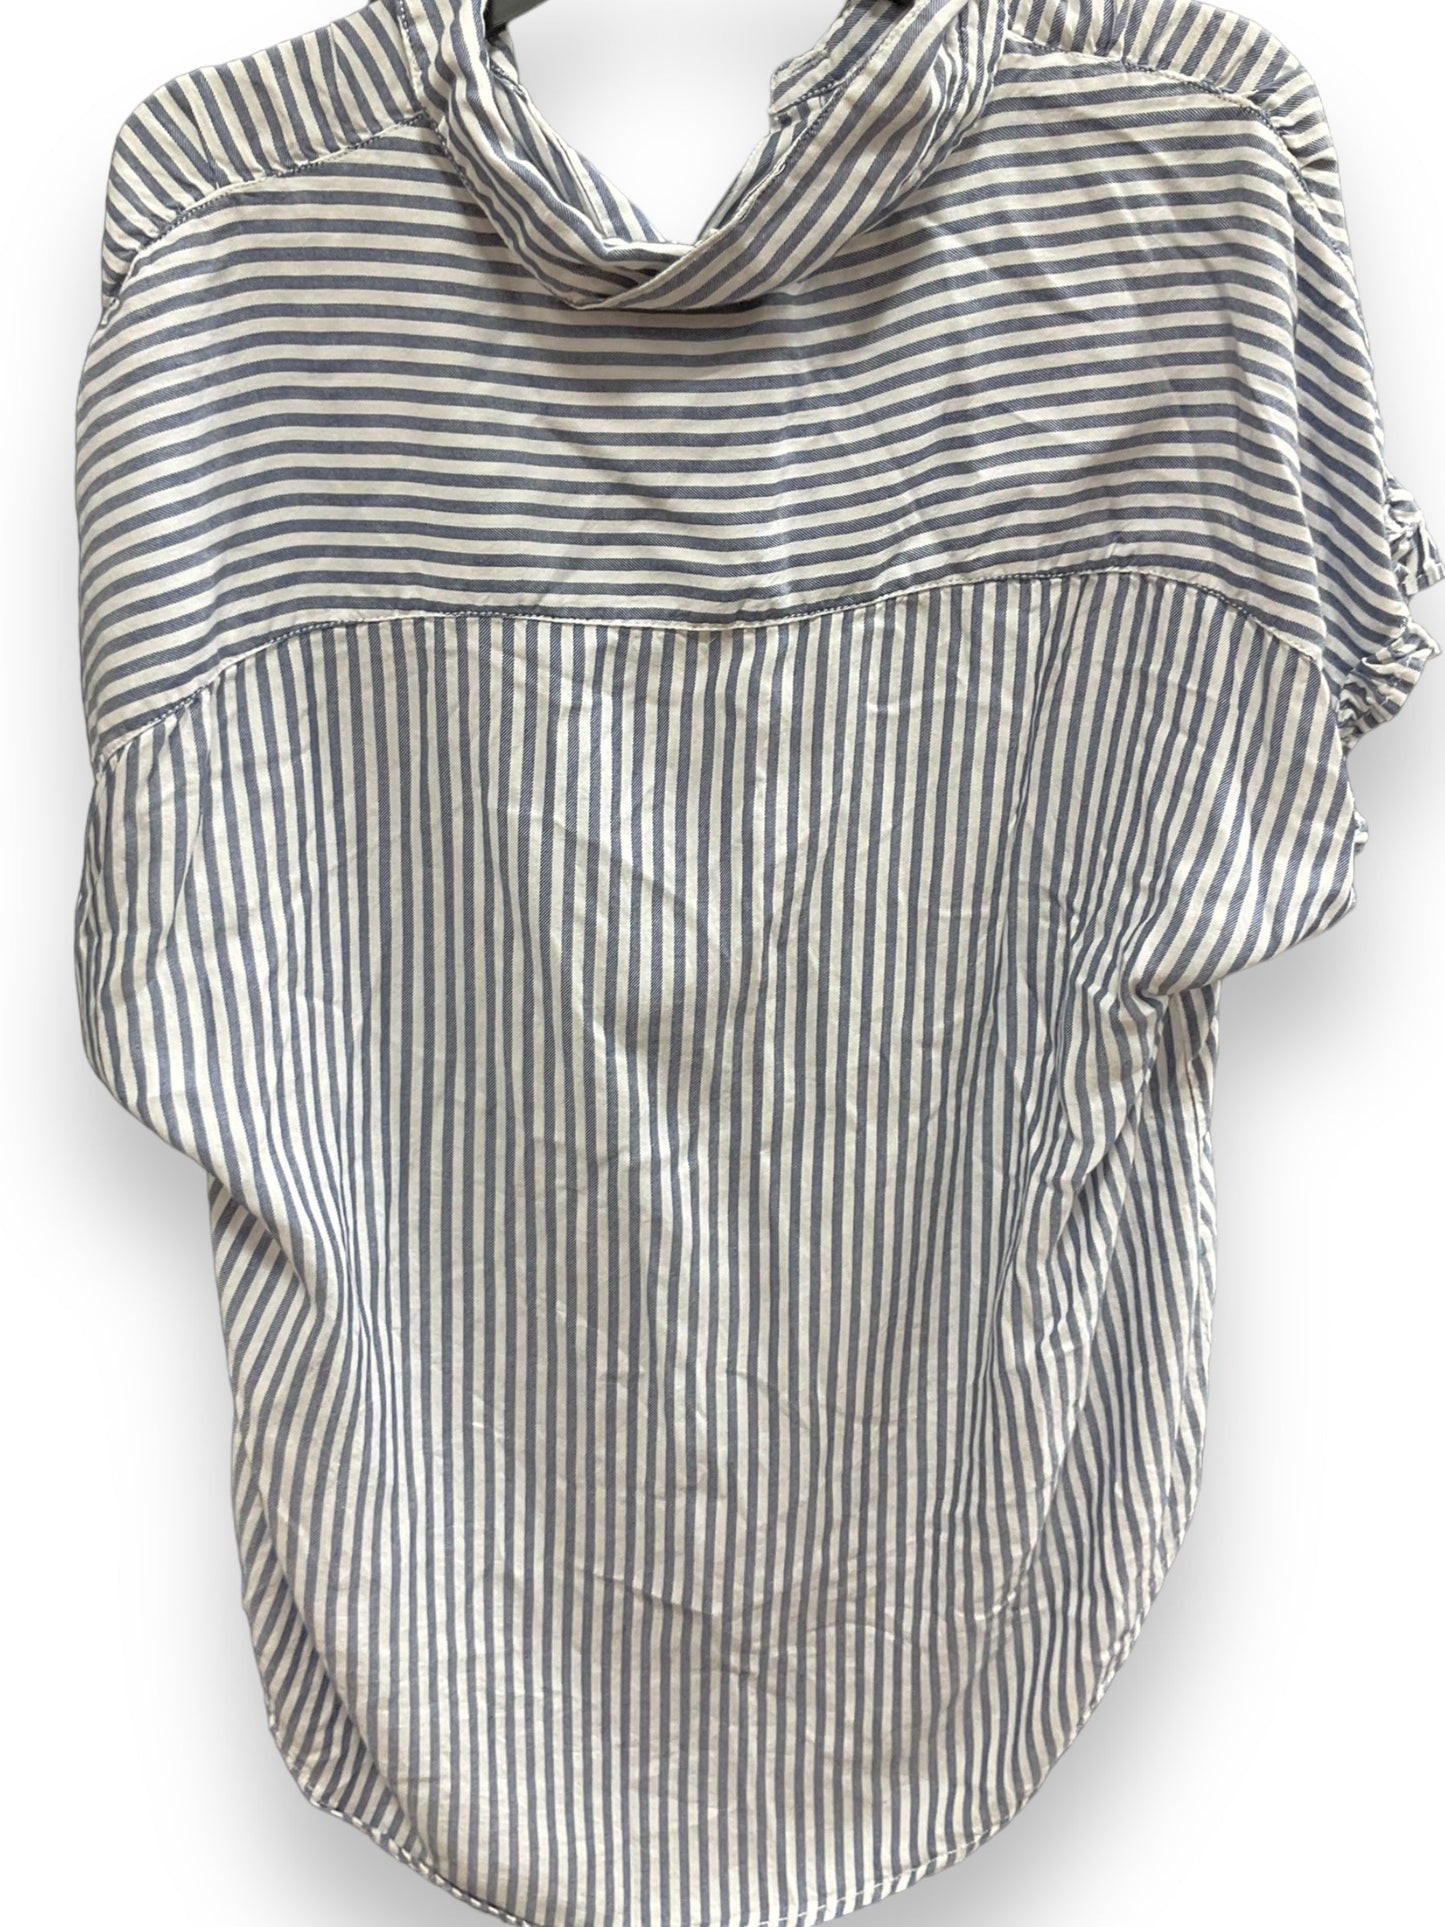 Striped Pattern Blouse Short Sleeve Beachlunchlounge, Size Xl